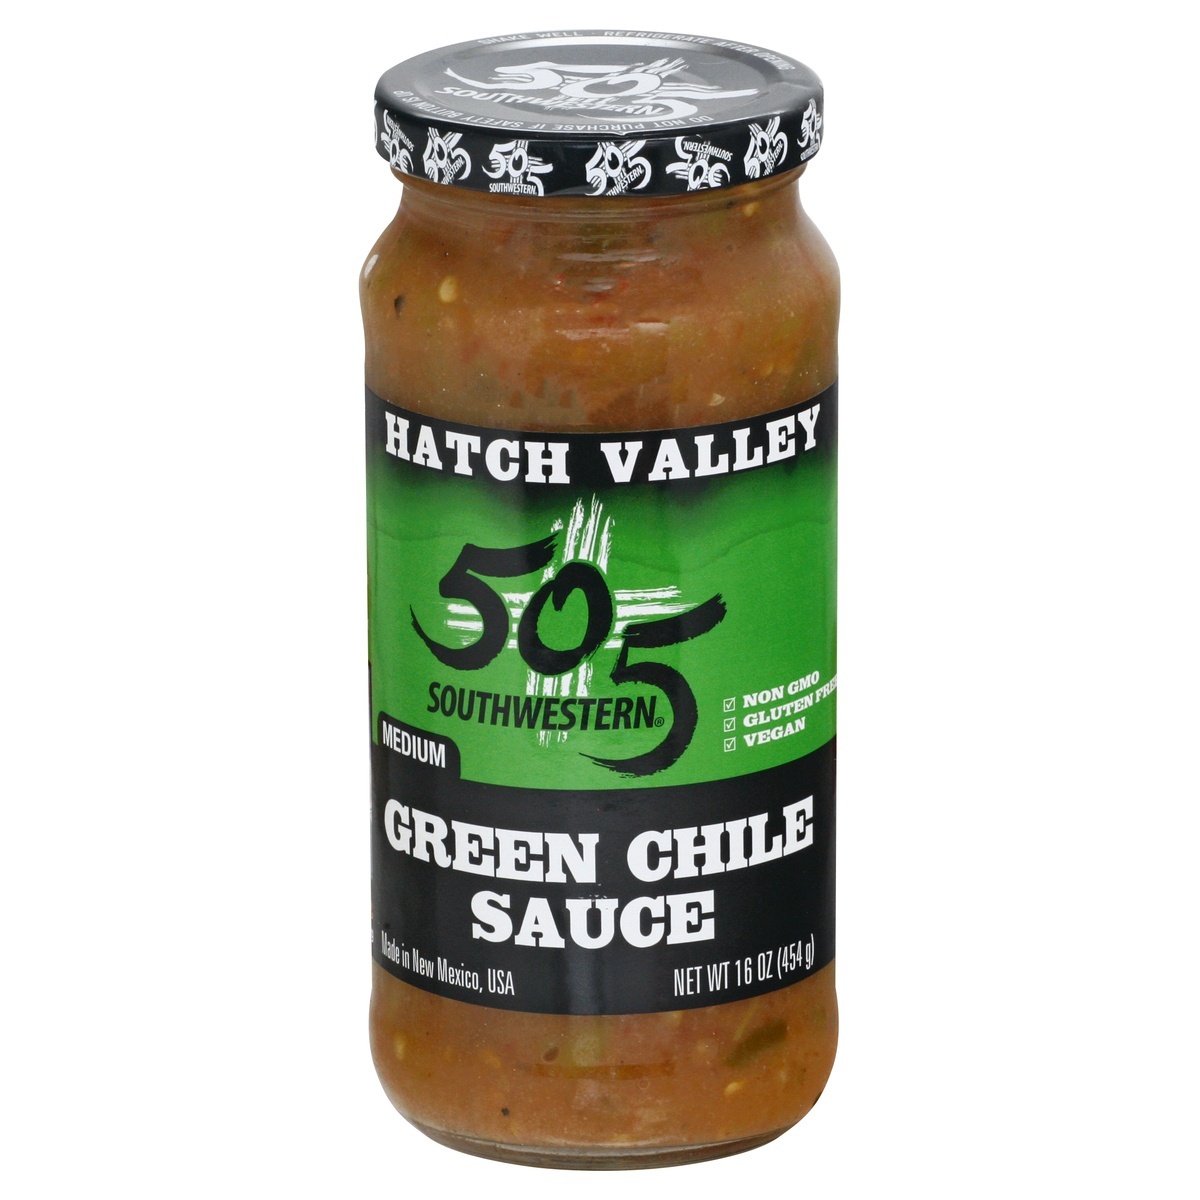 slide 1 of 1, 505 Southwestern Medium Hatch Valley Green Chile Sauce, 16 oz